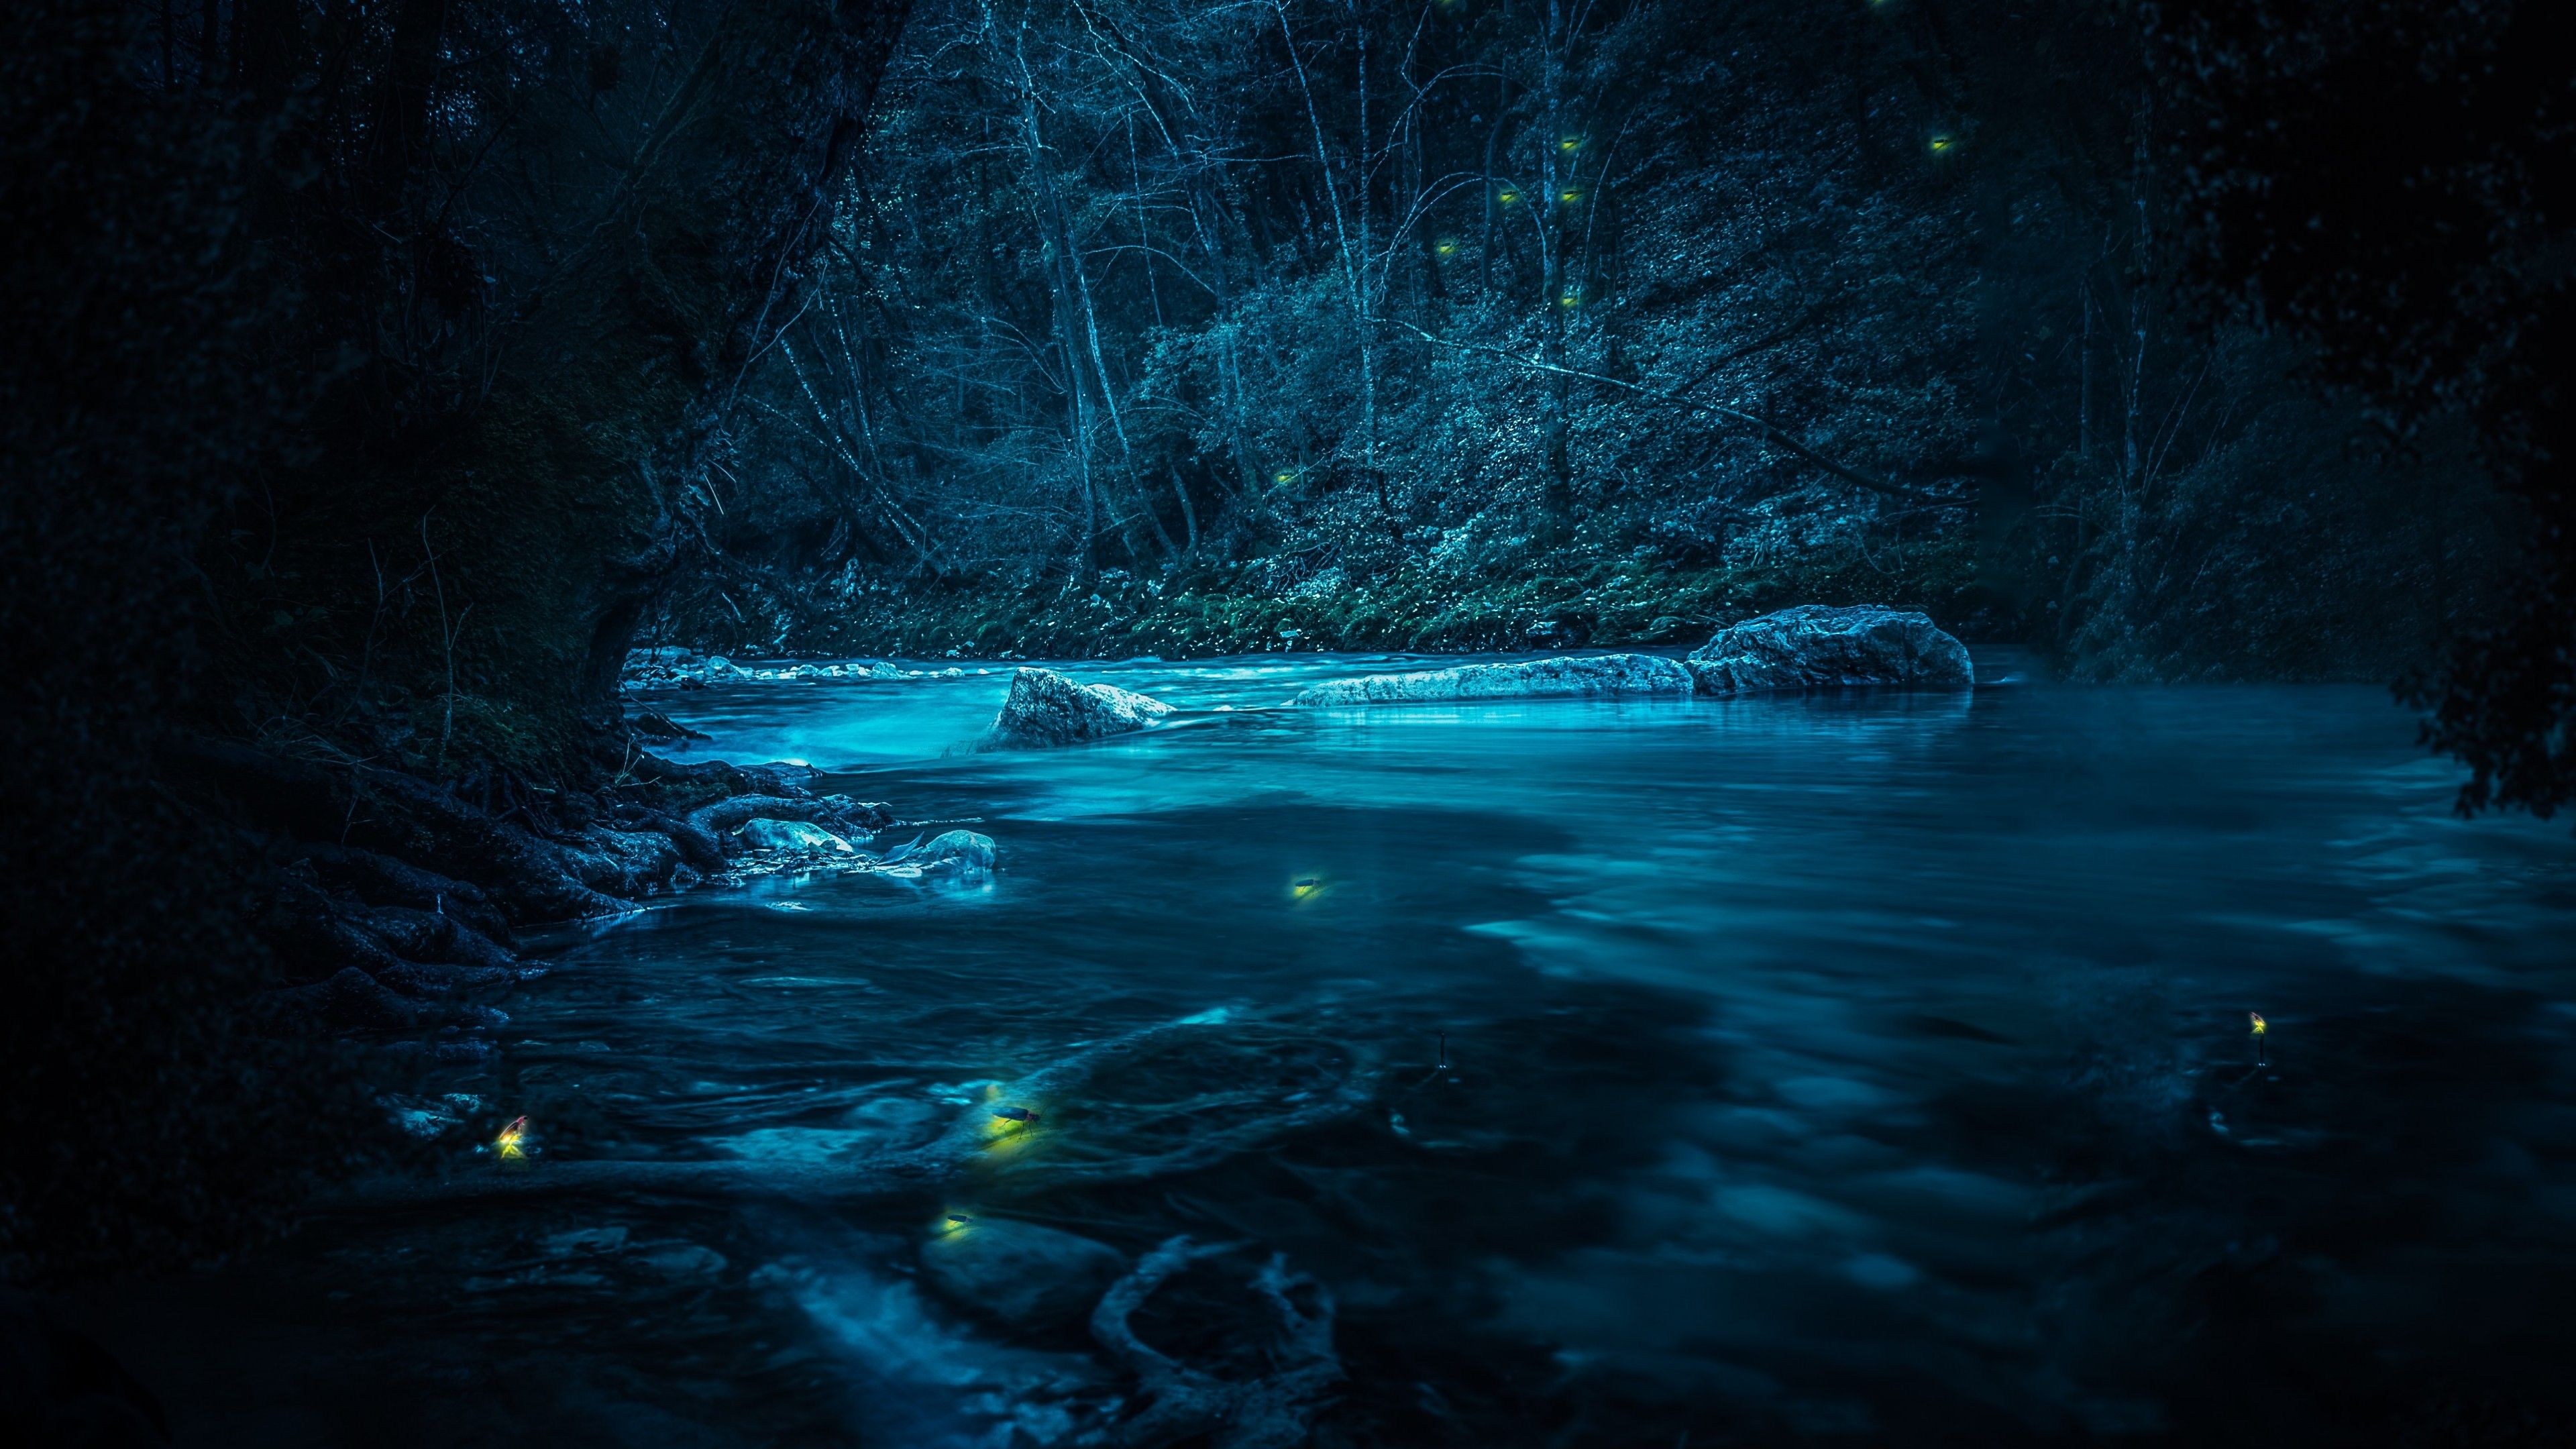 Forest 4K Wallpaper, River, Night, Dark, Magical, Crescent Moon, Blue, Fairies, Nature